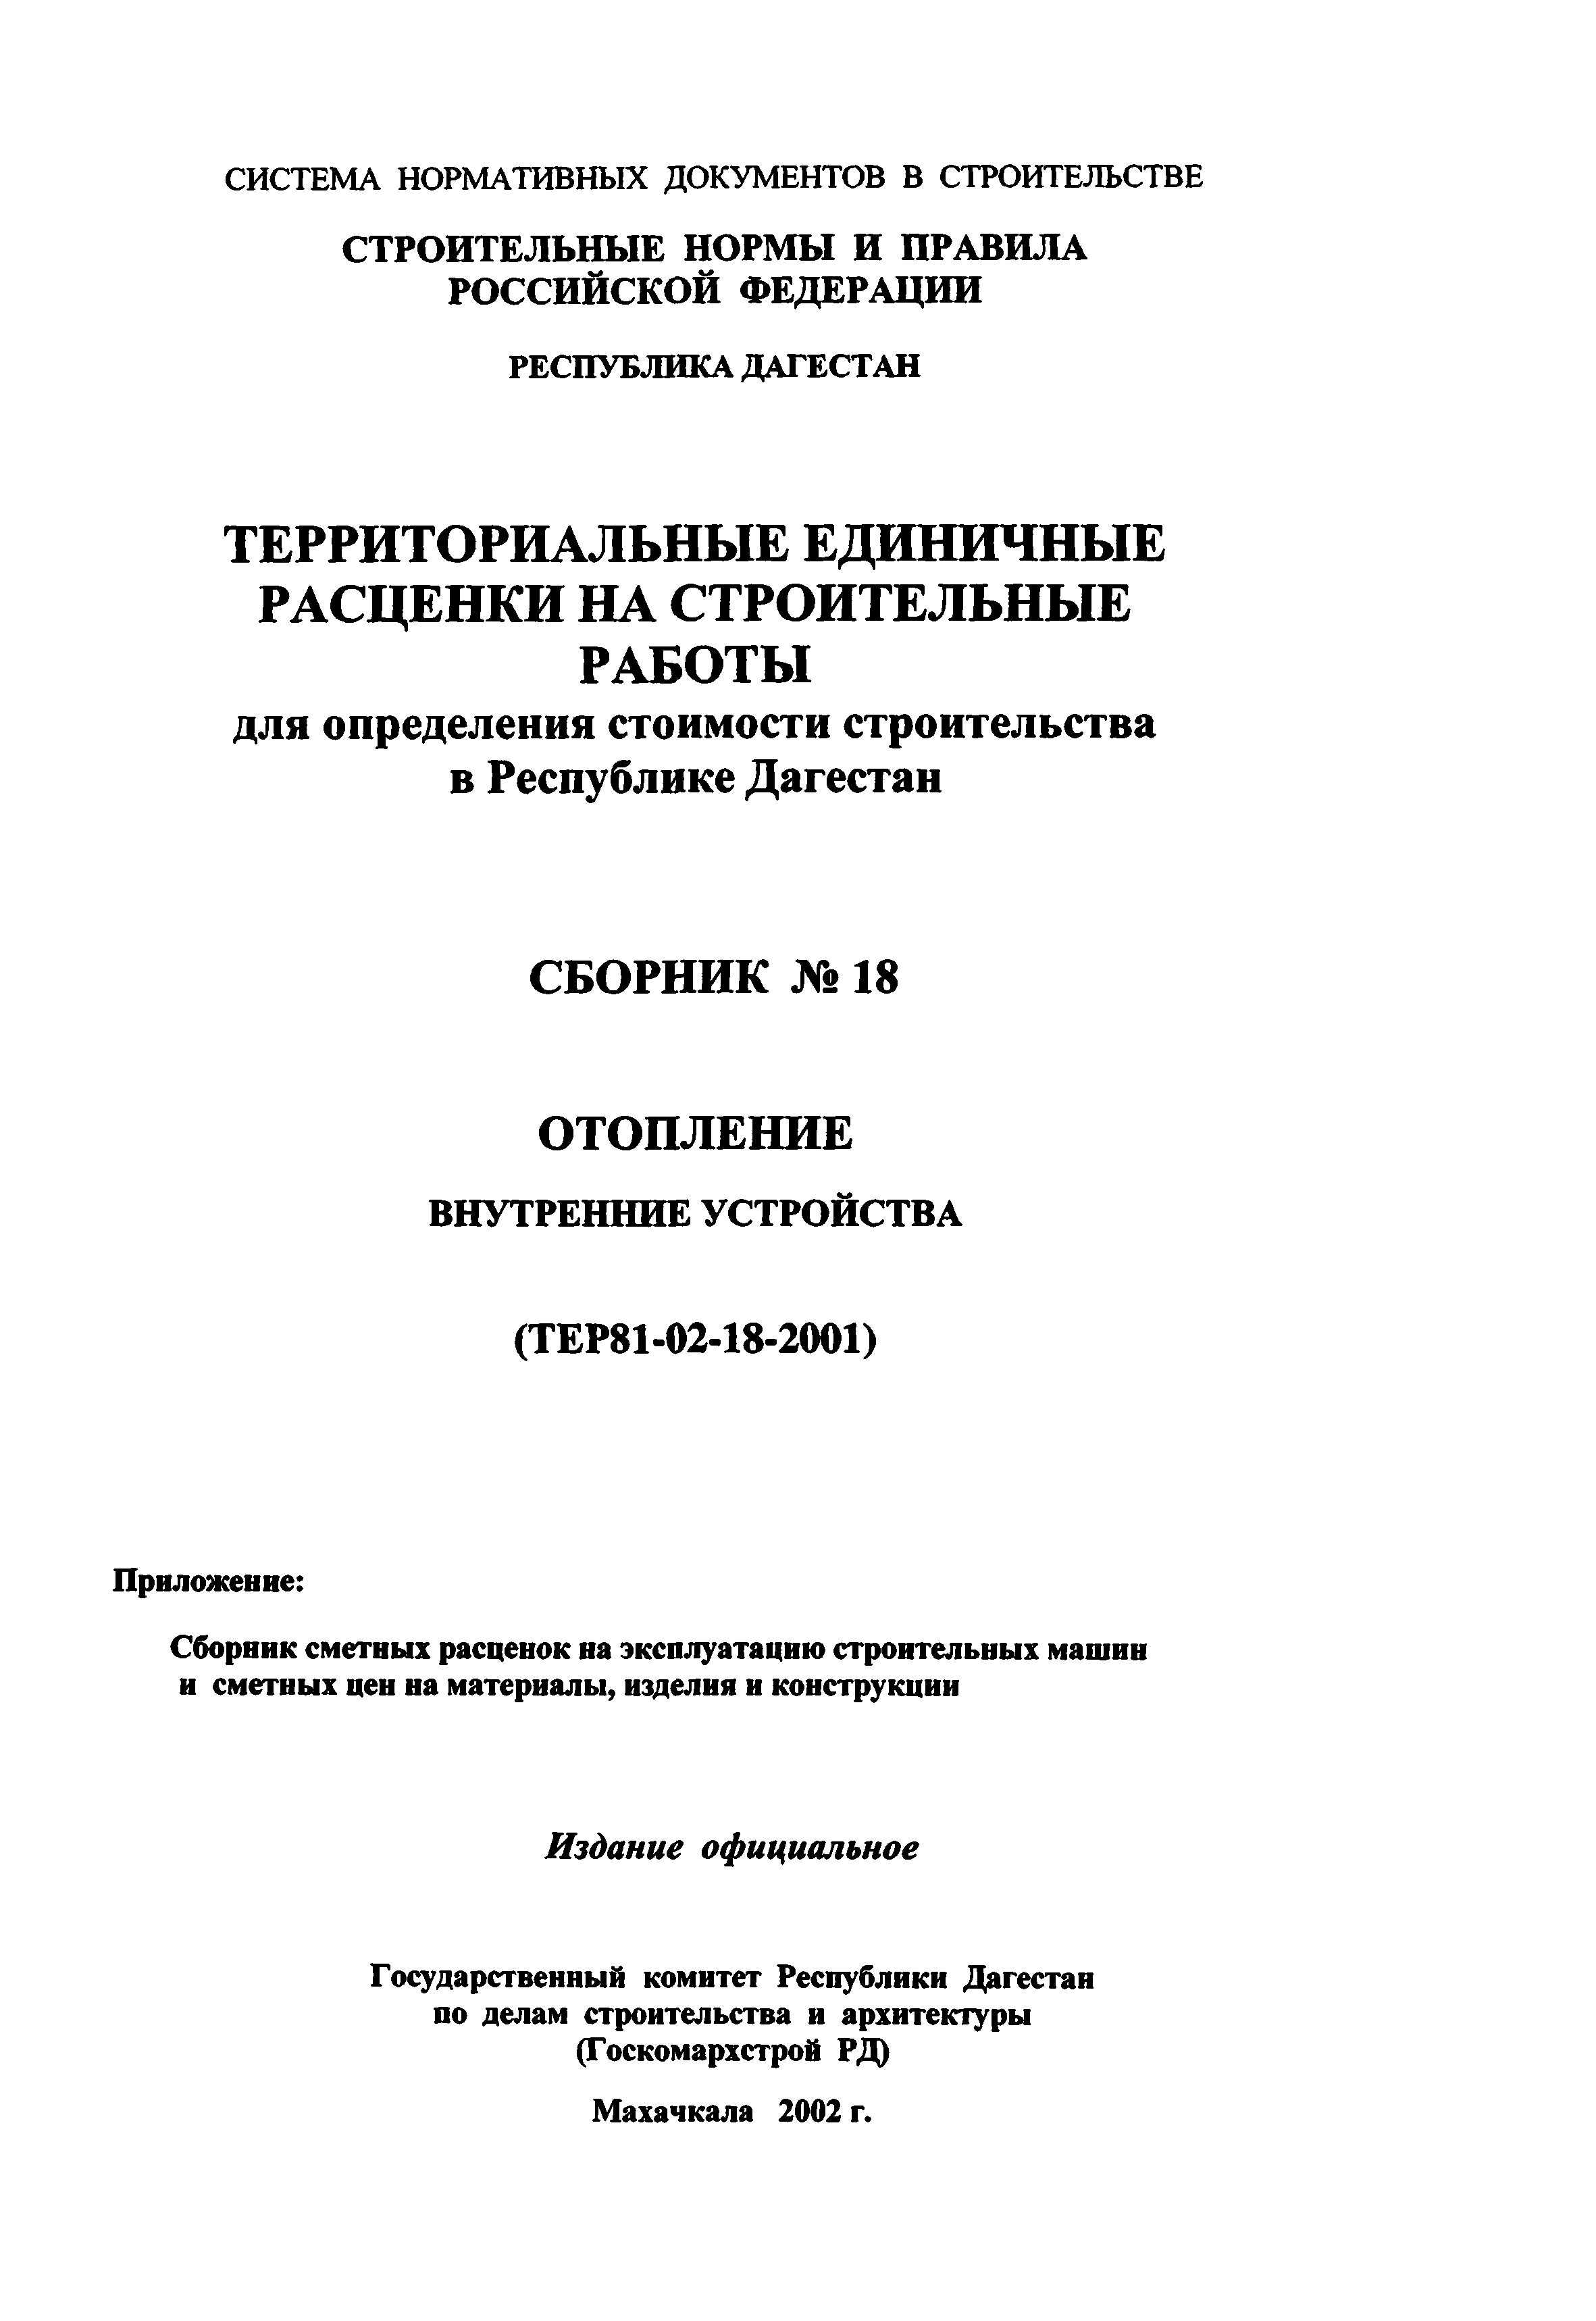 ТЕР Республика Дагестан 2001-18